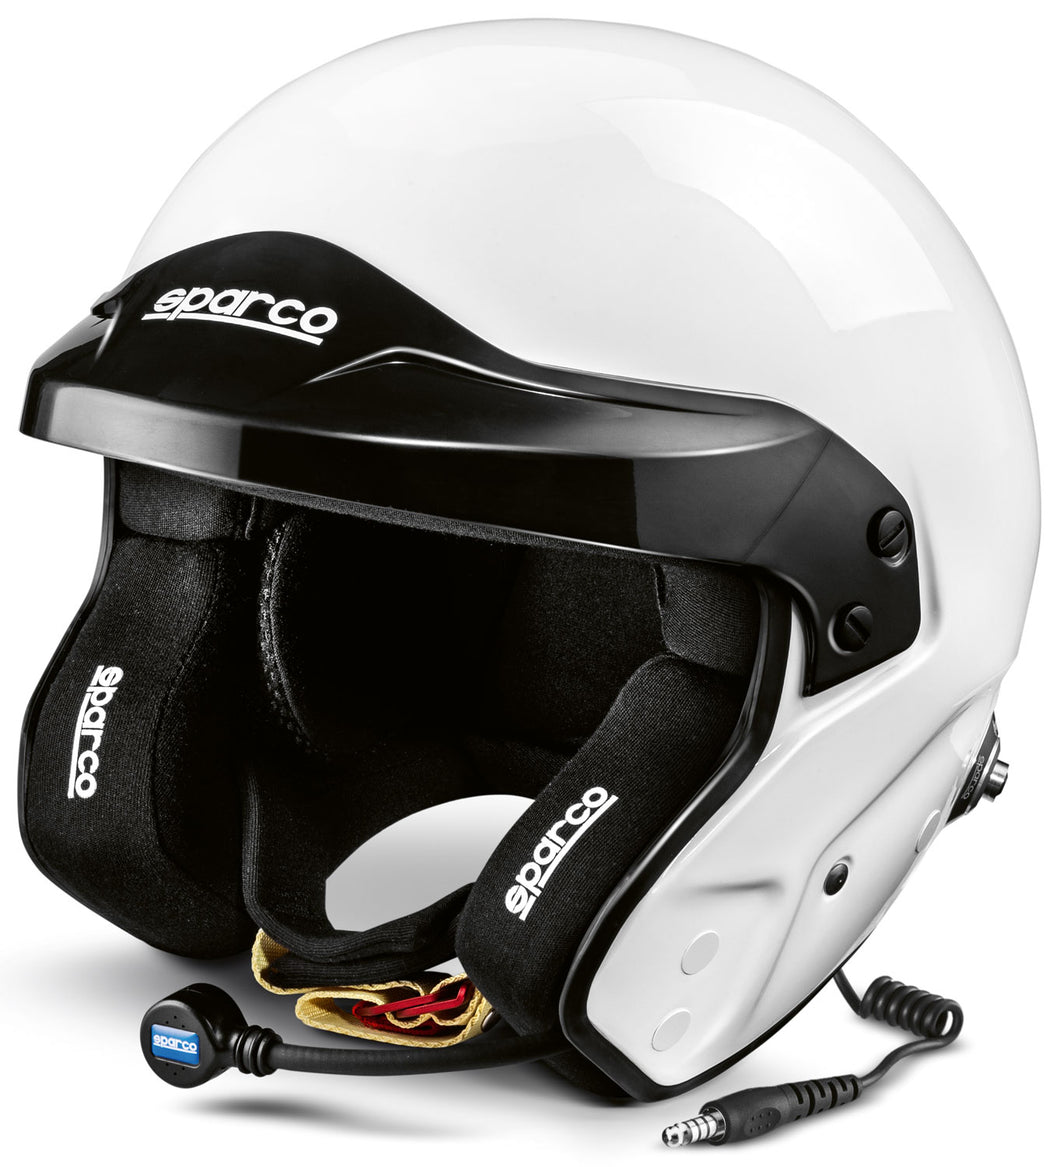 Sparco helmet Pro RJ-3i